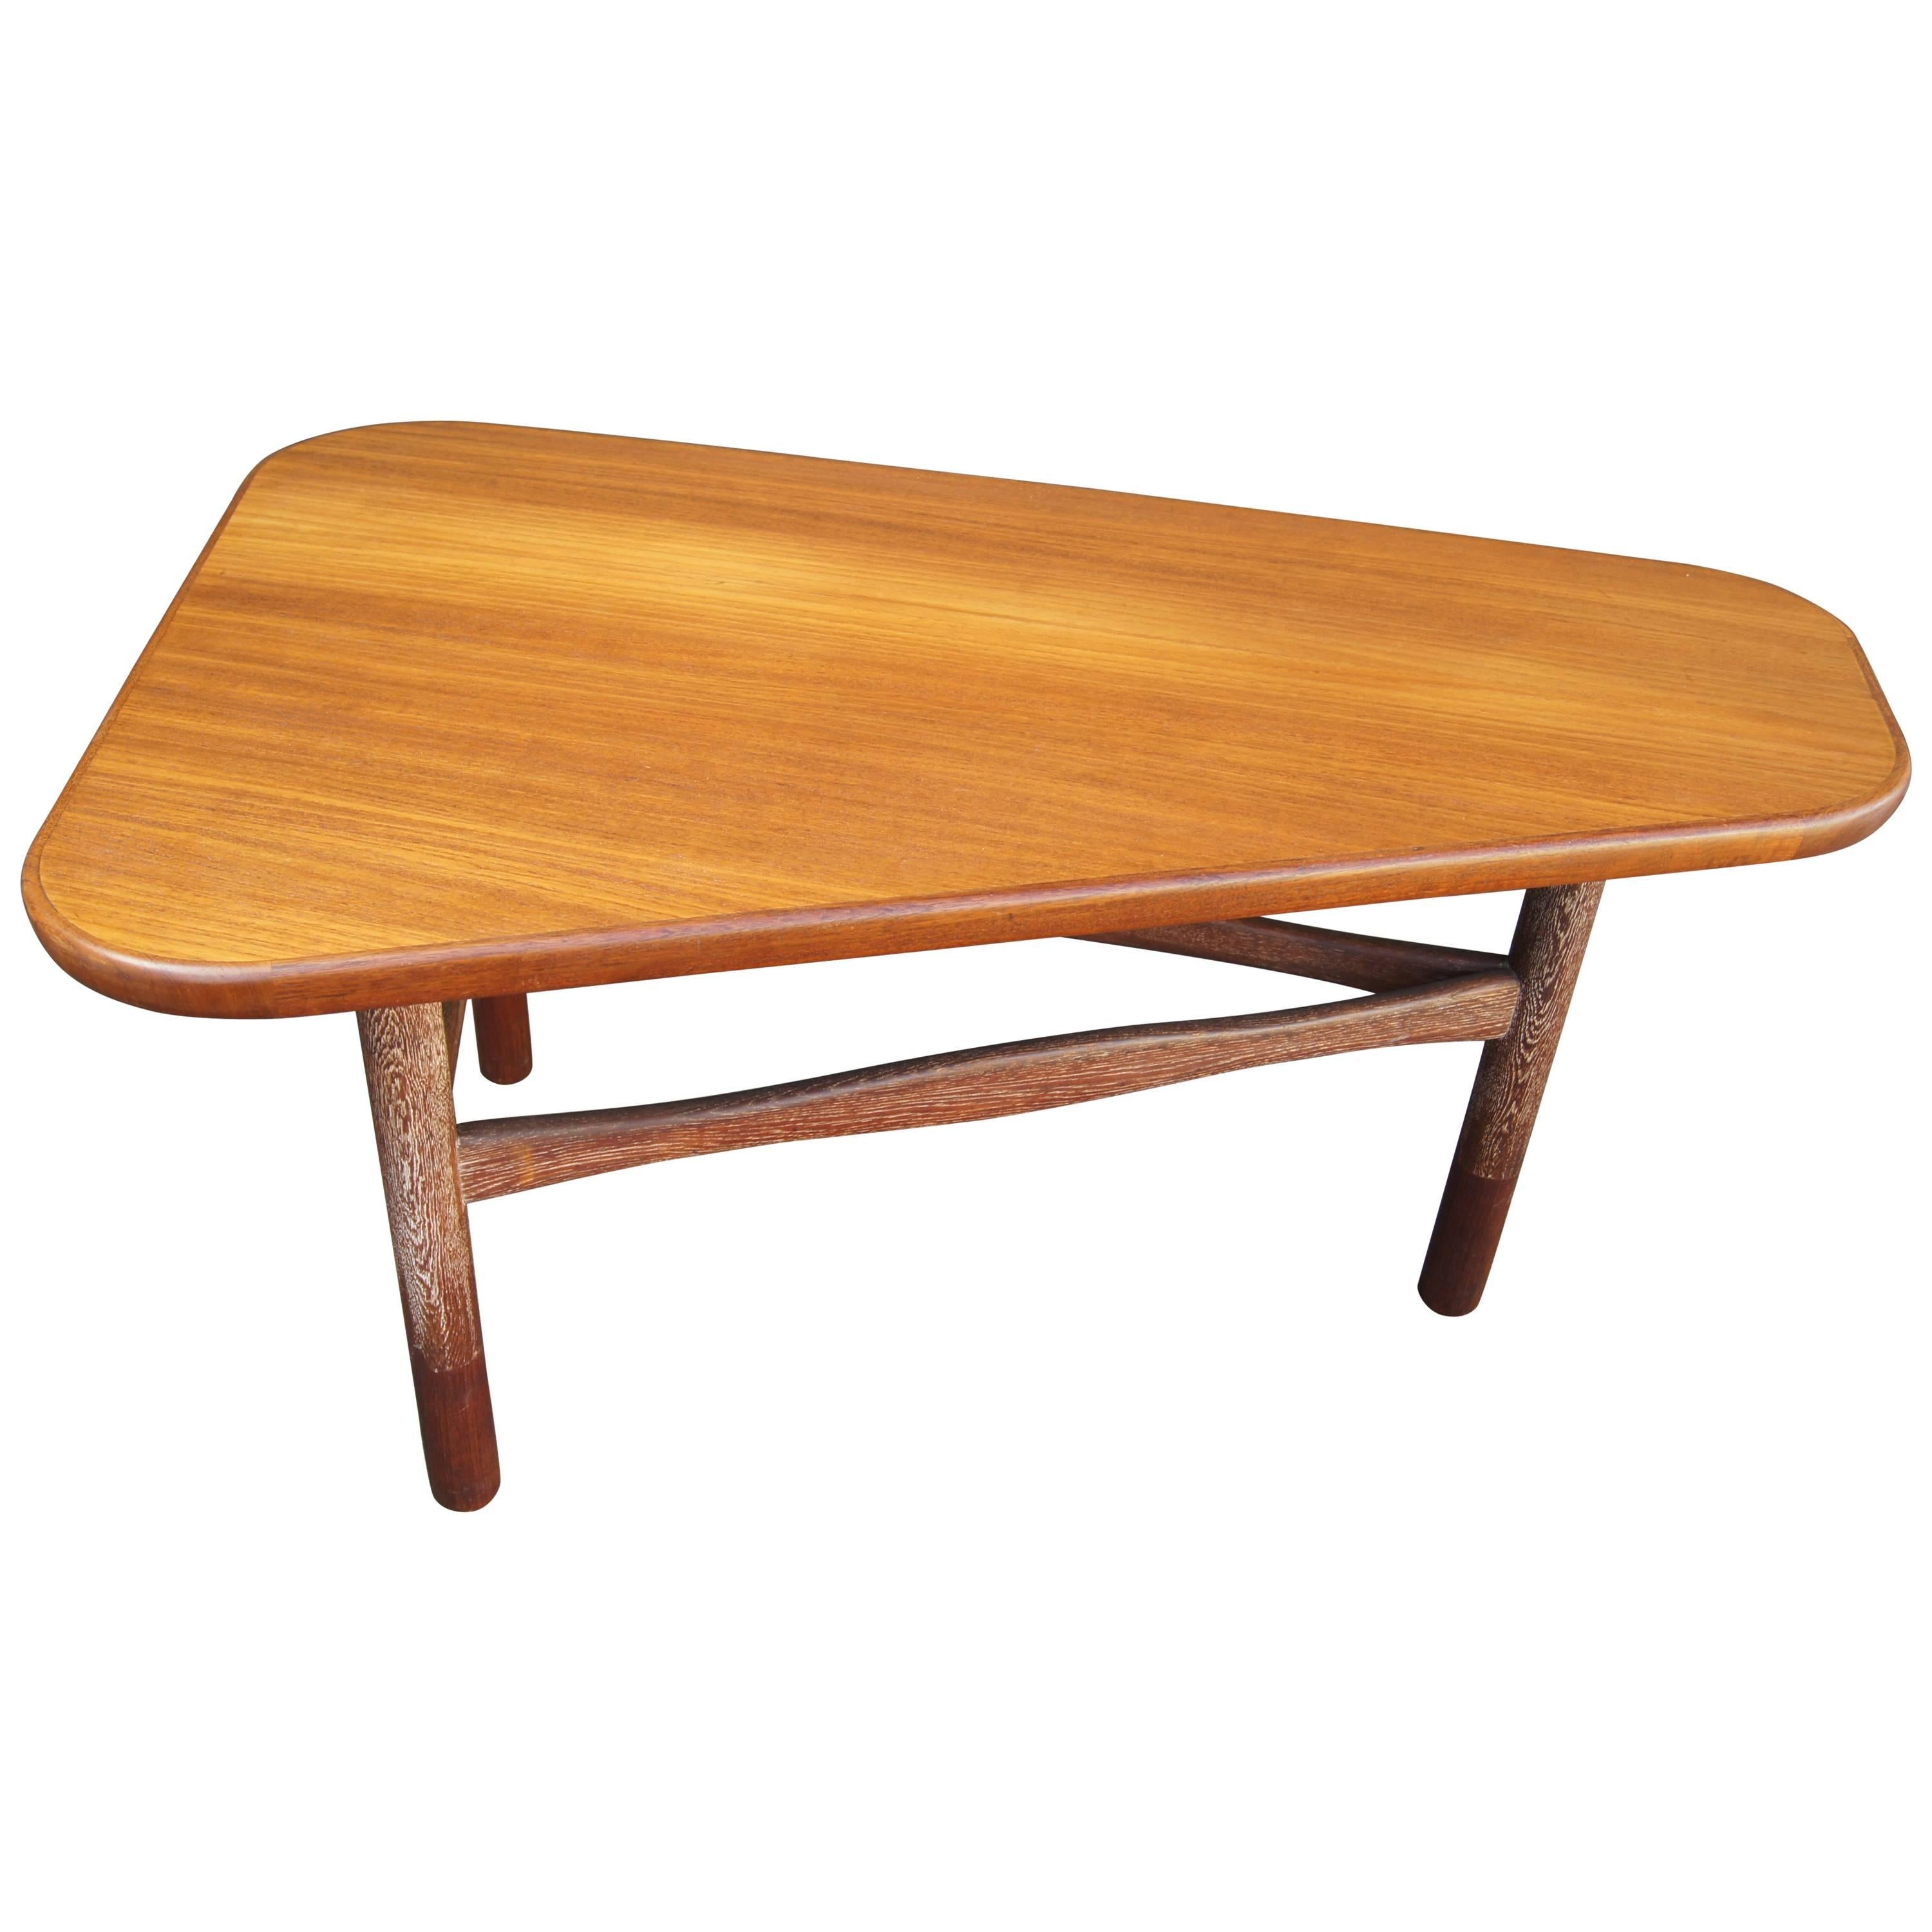 Teak and Limed Oak Three-Legged Table by Yngve Ekström for Westbergs Möbler